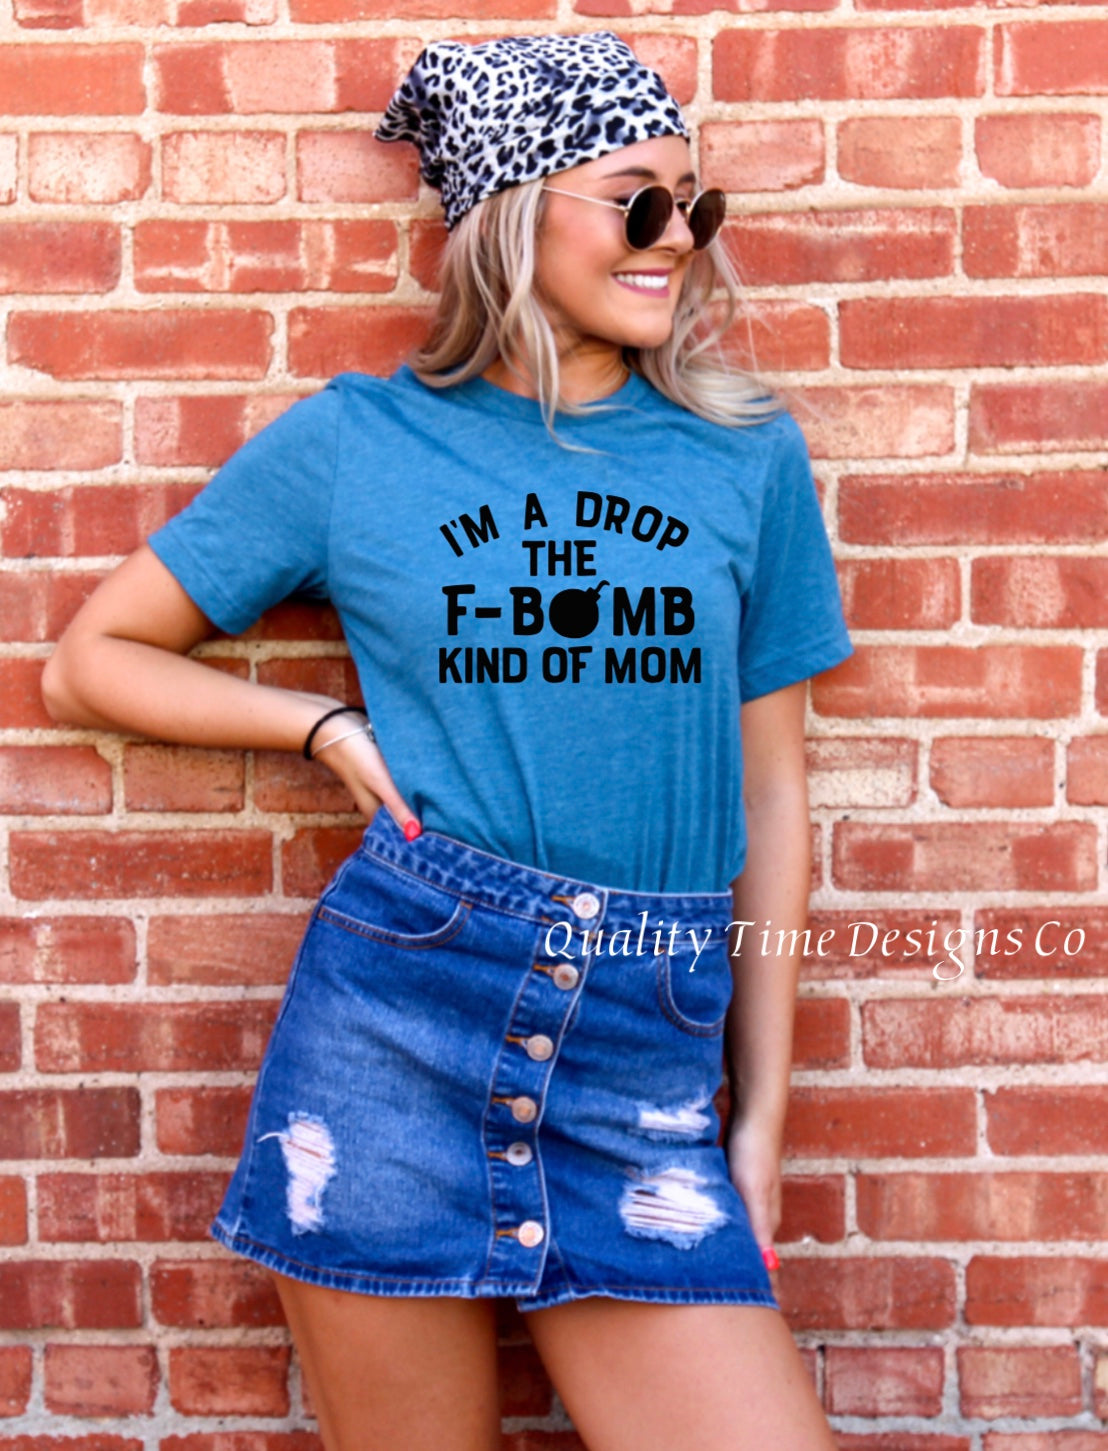 I’m a drop the f-bomb kind of mom t-shirt 